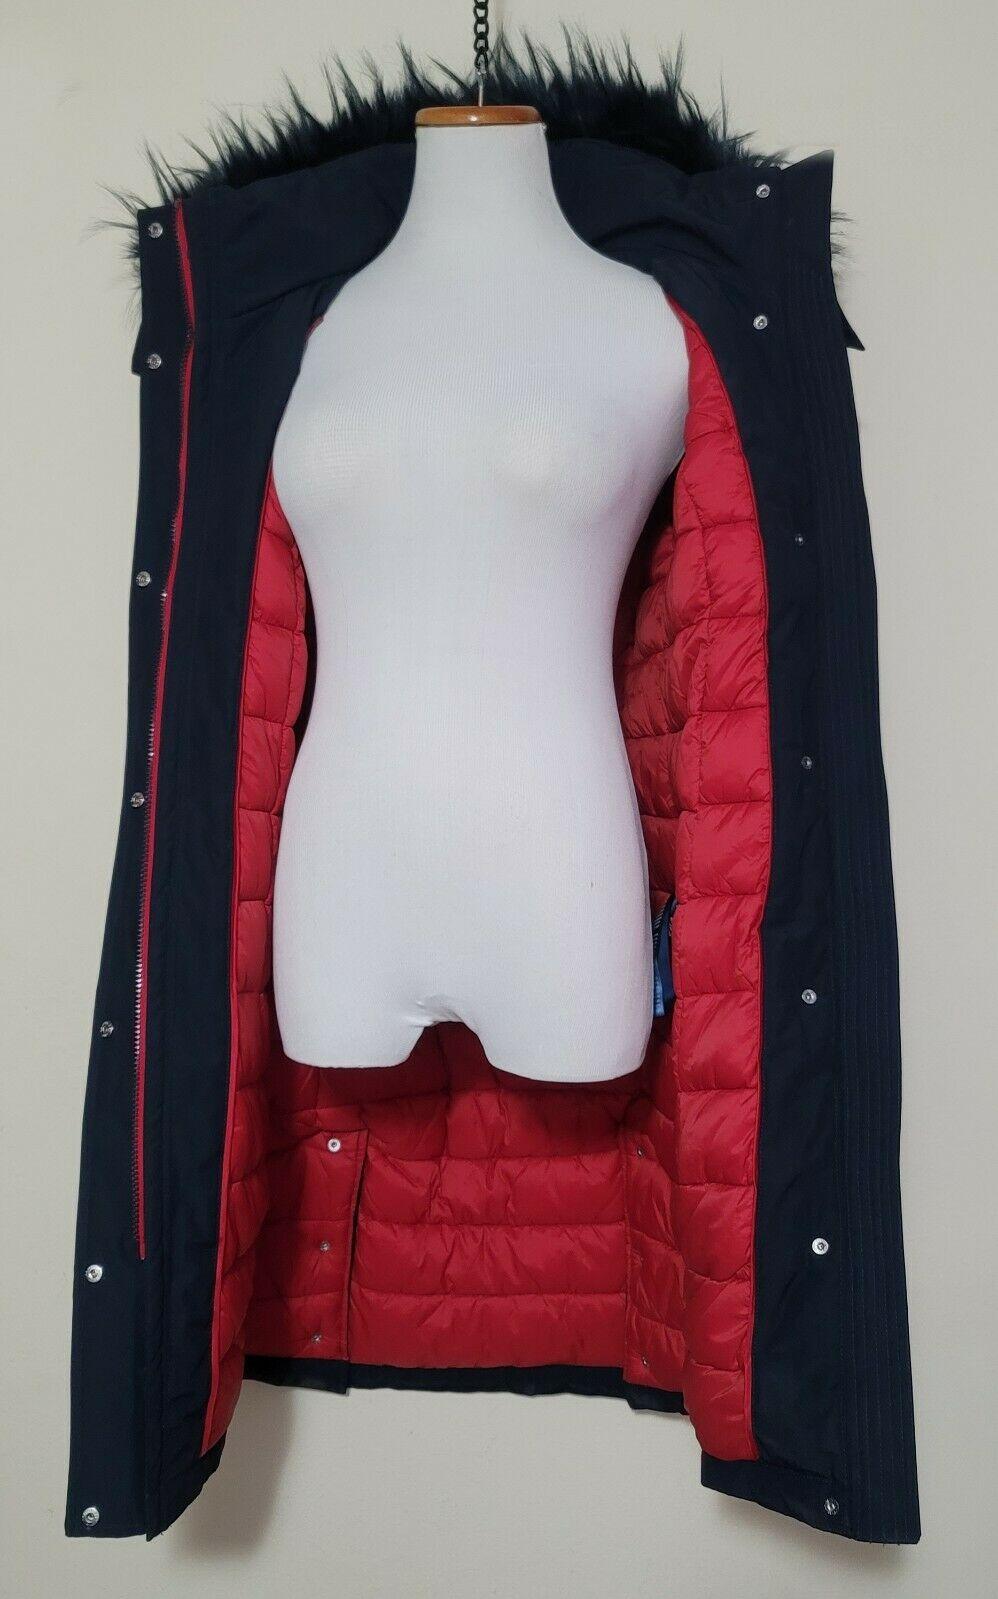 TOMMY HILFIGER Womens Navy Hooded Warm Winter Parka Coat Size S - SVNYFancy